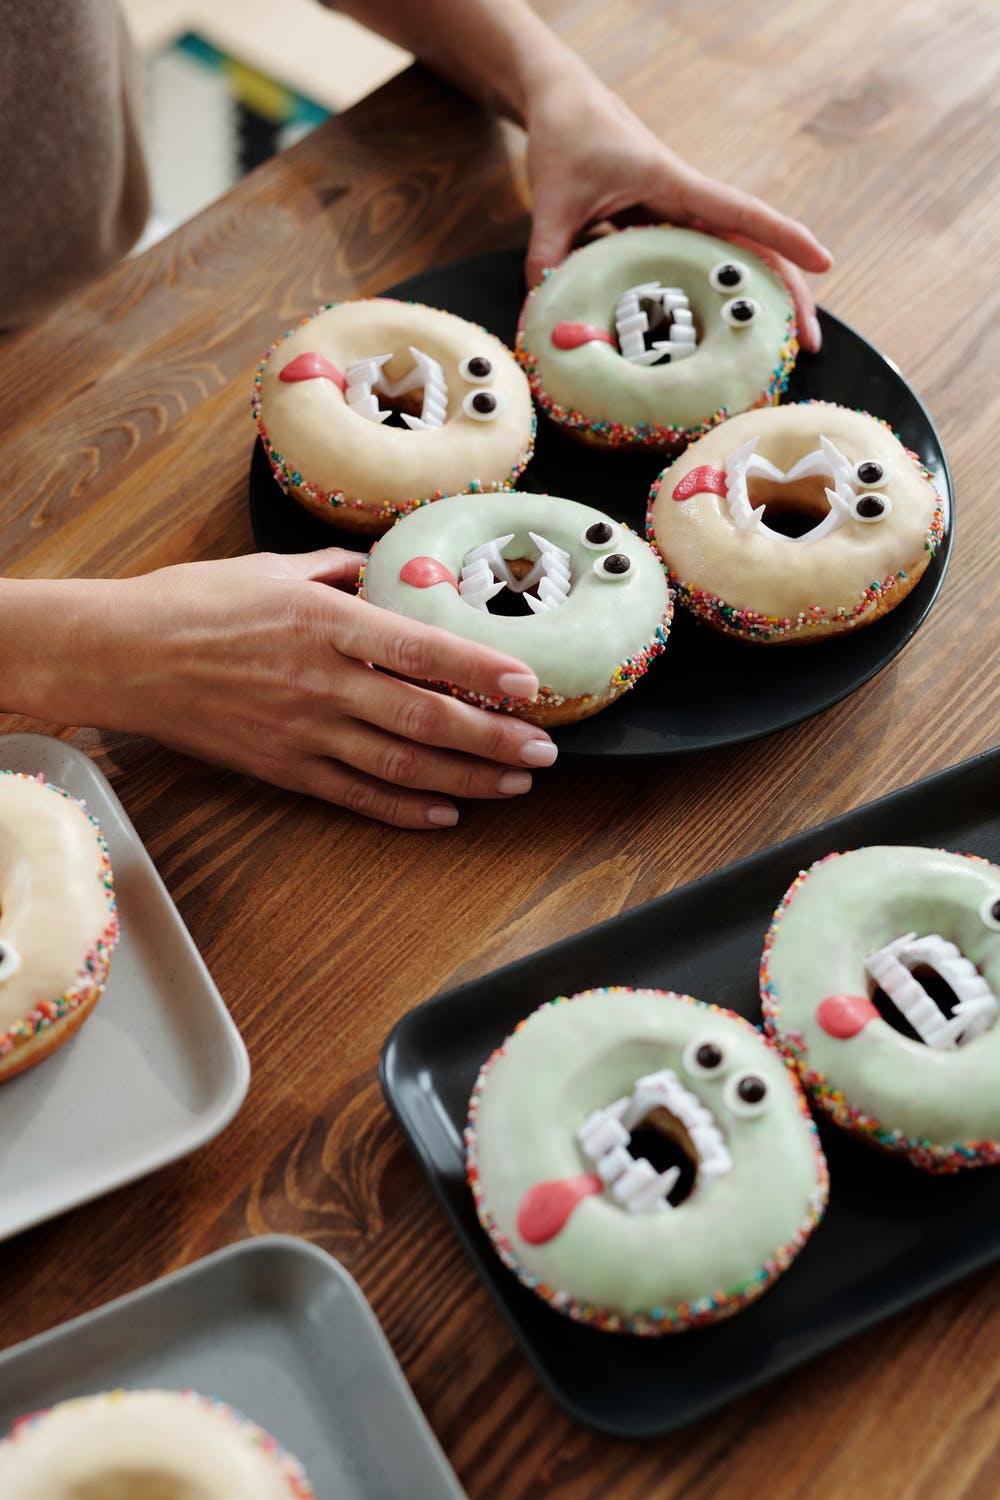 Five spooky sweet treats to bake this Halloween